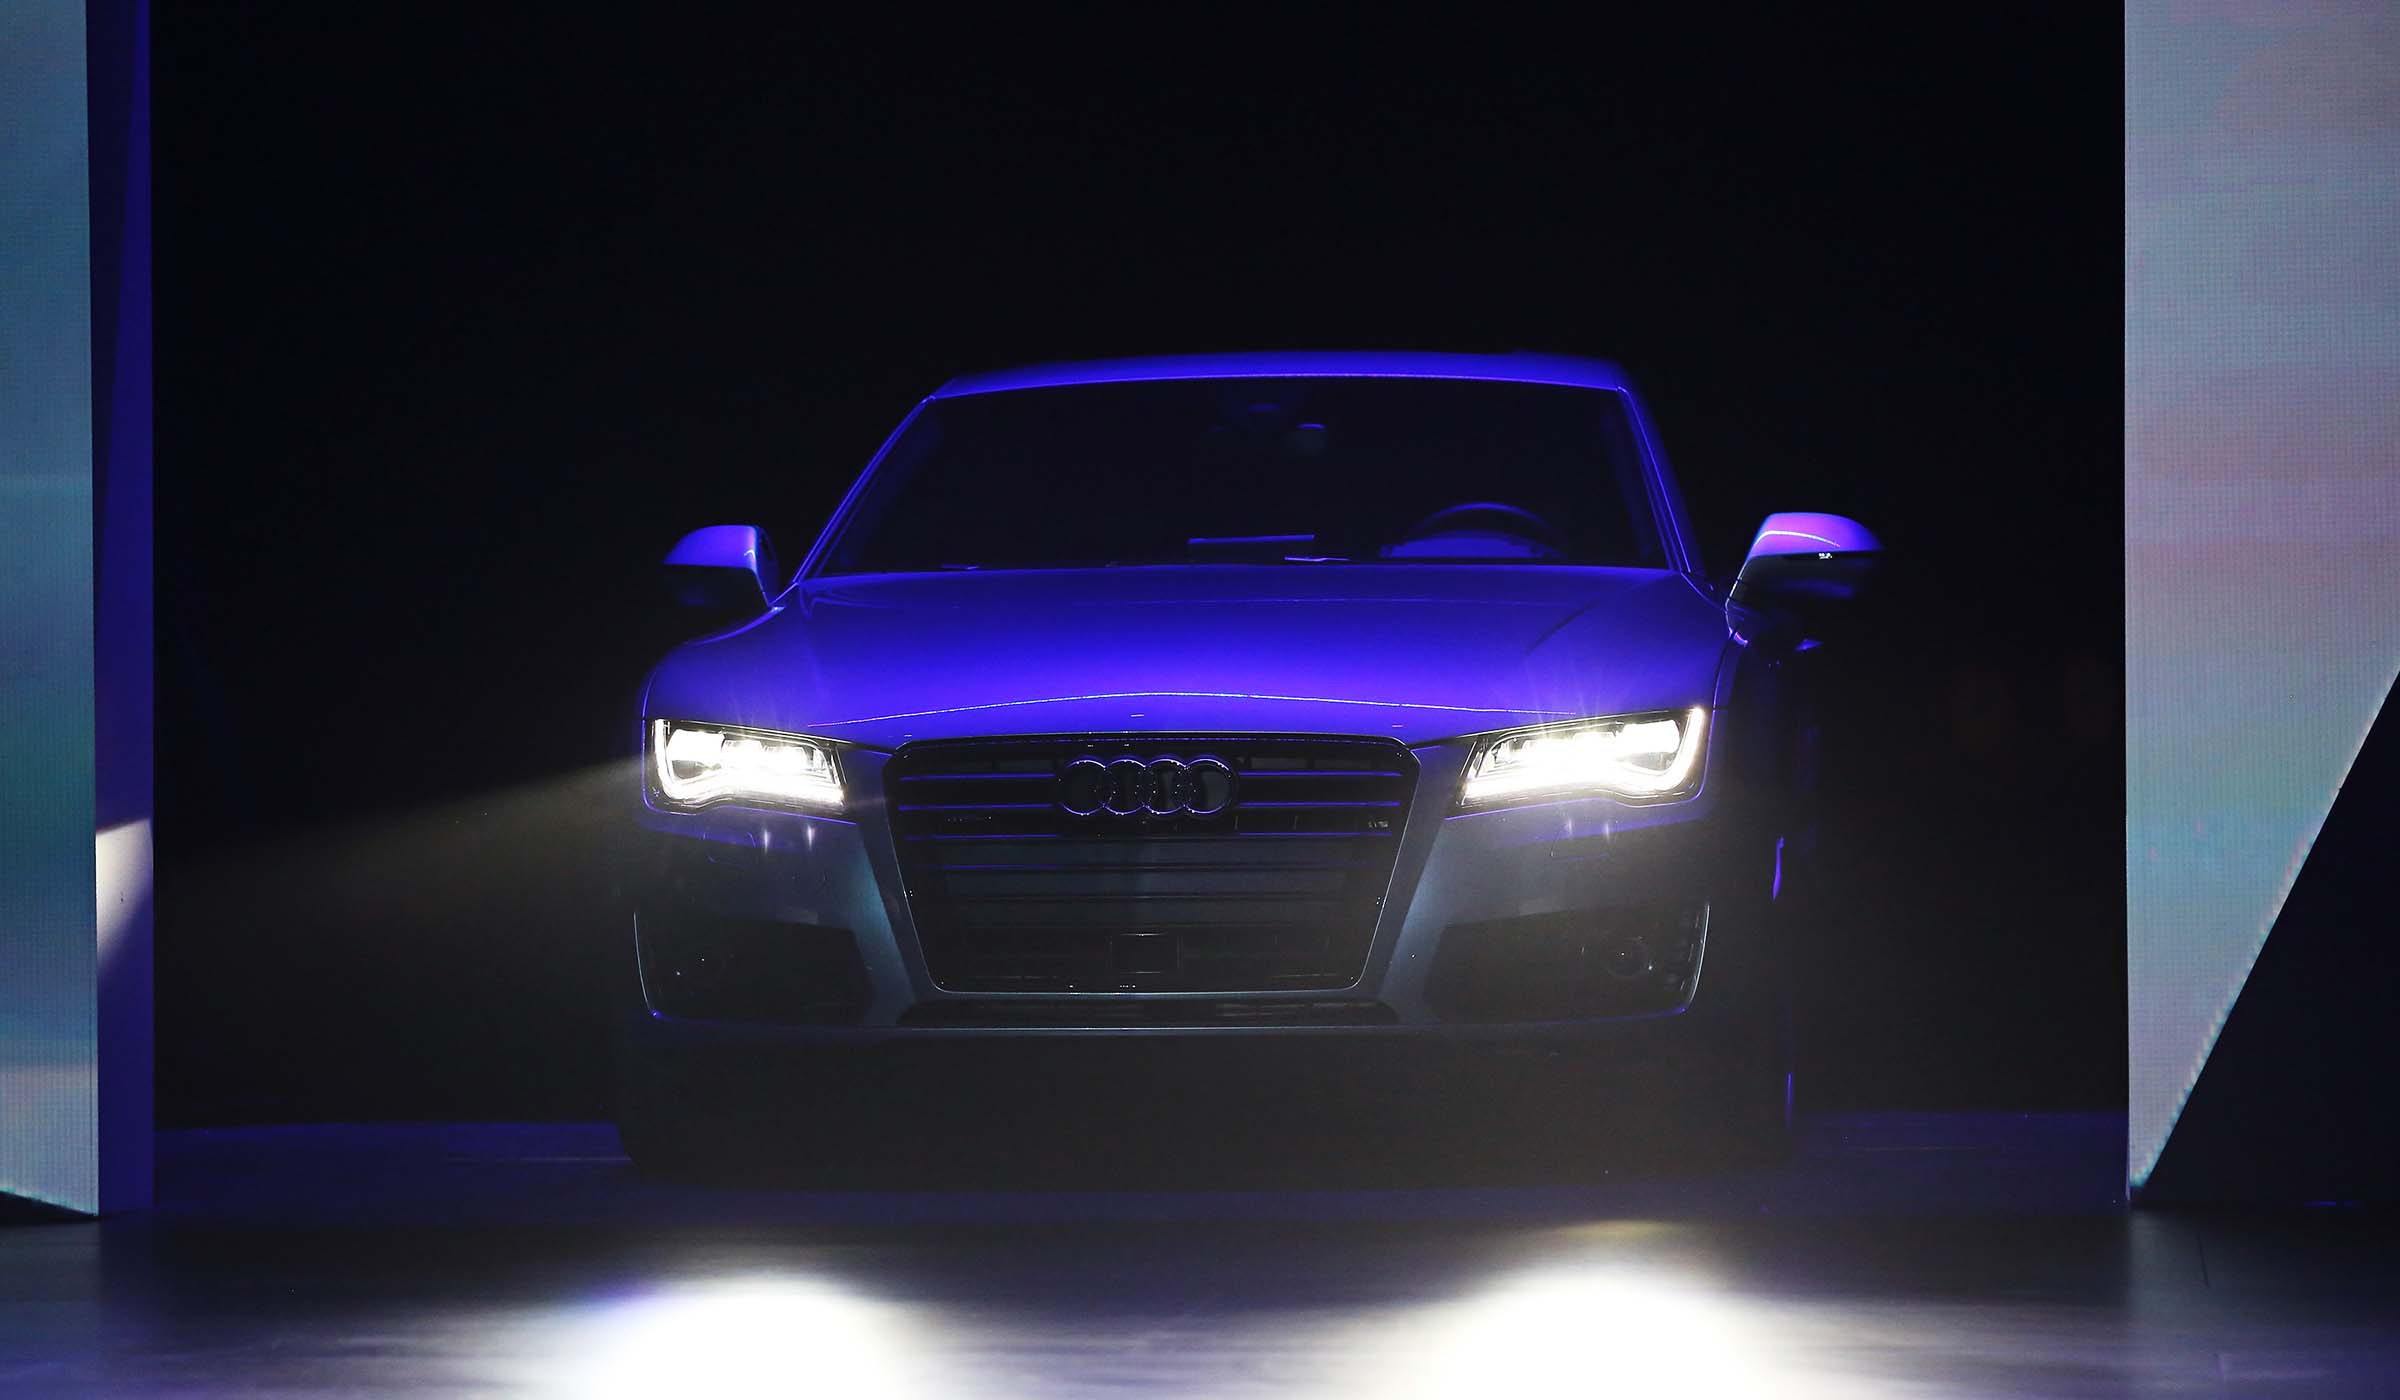 2014 Audi CES Keynote